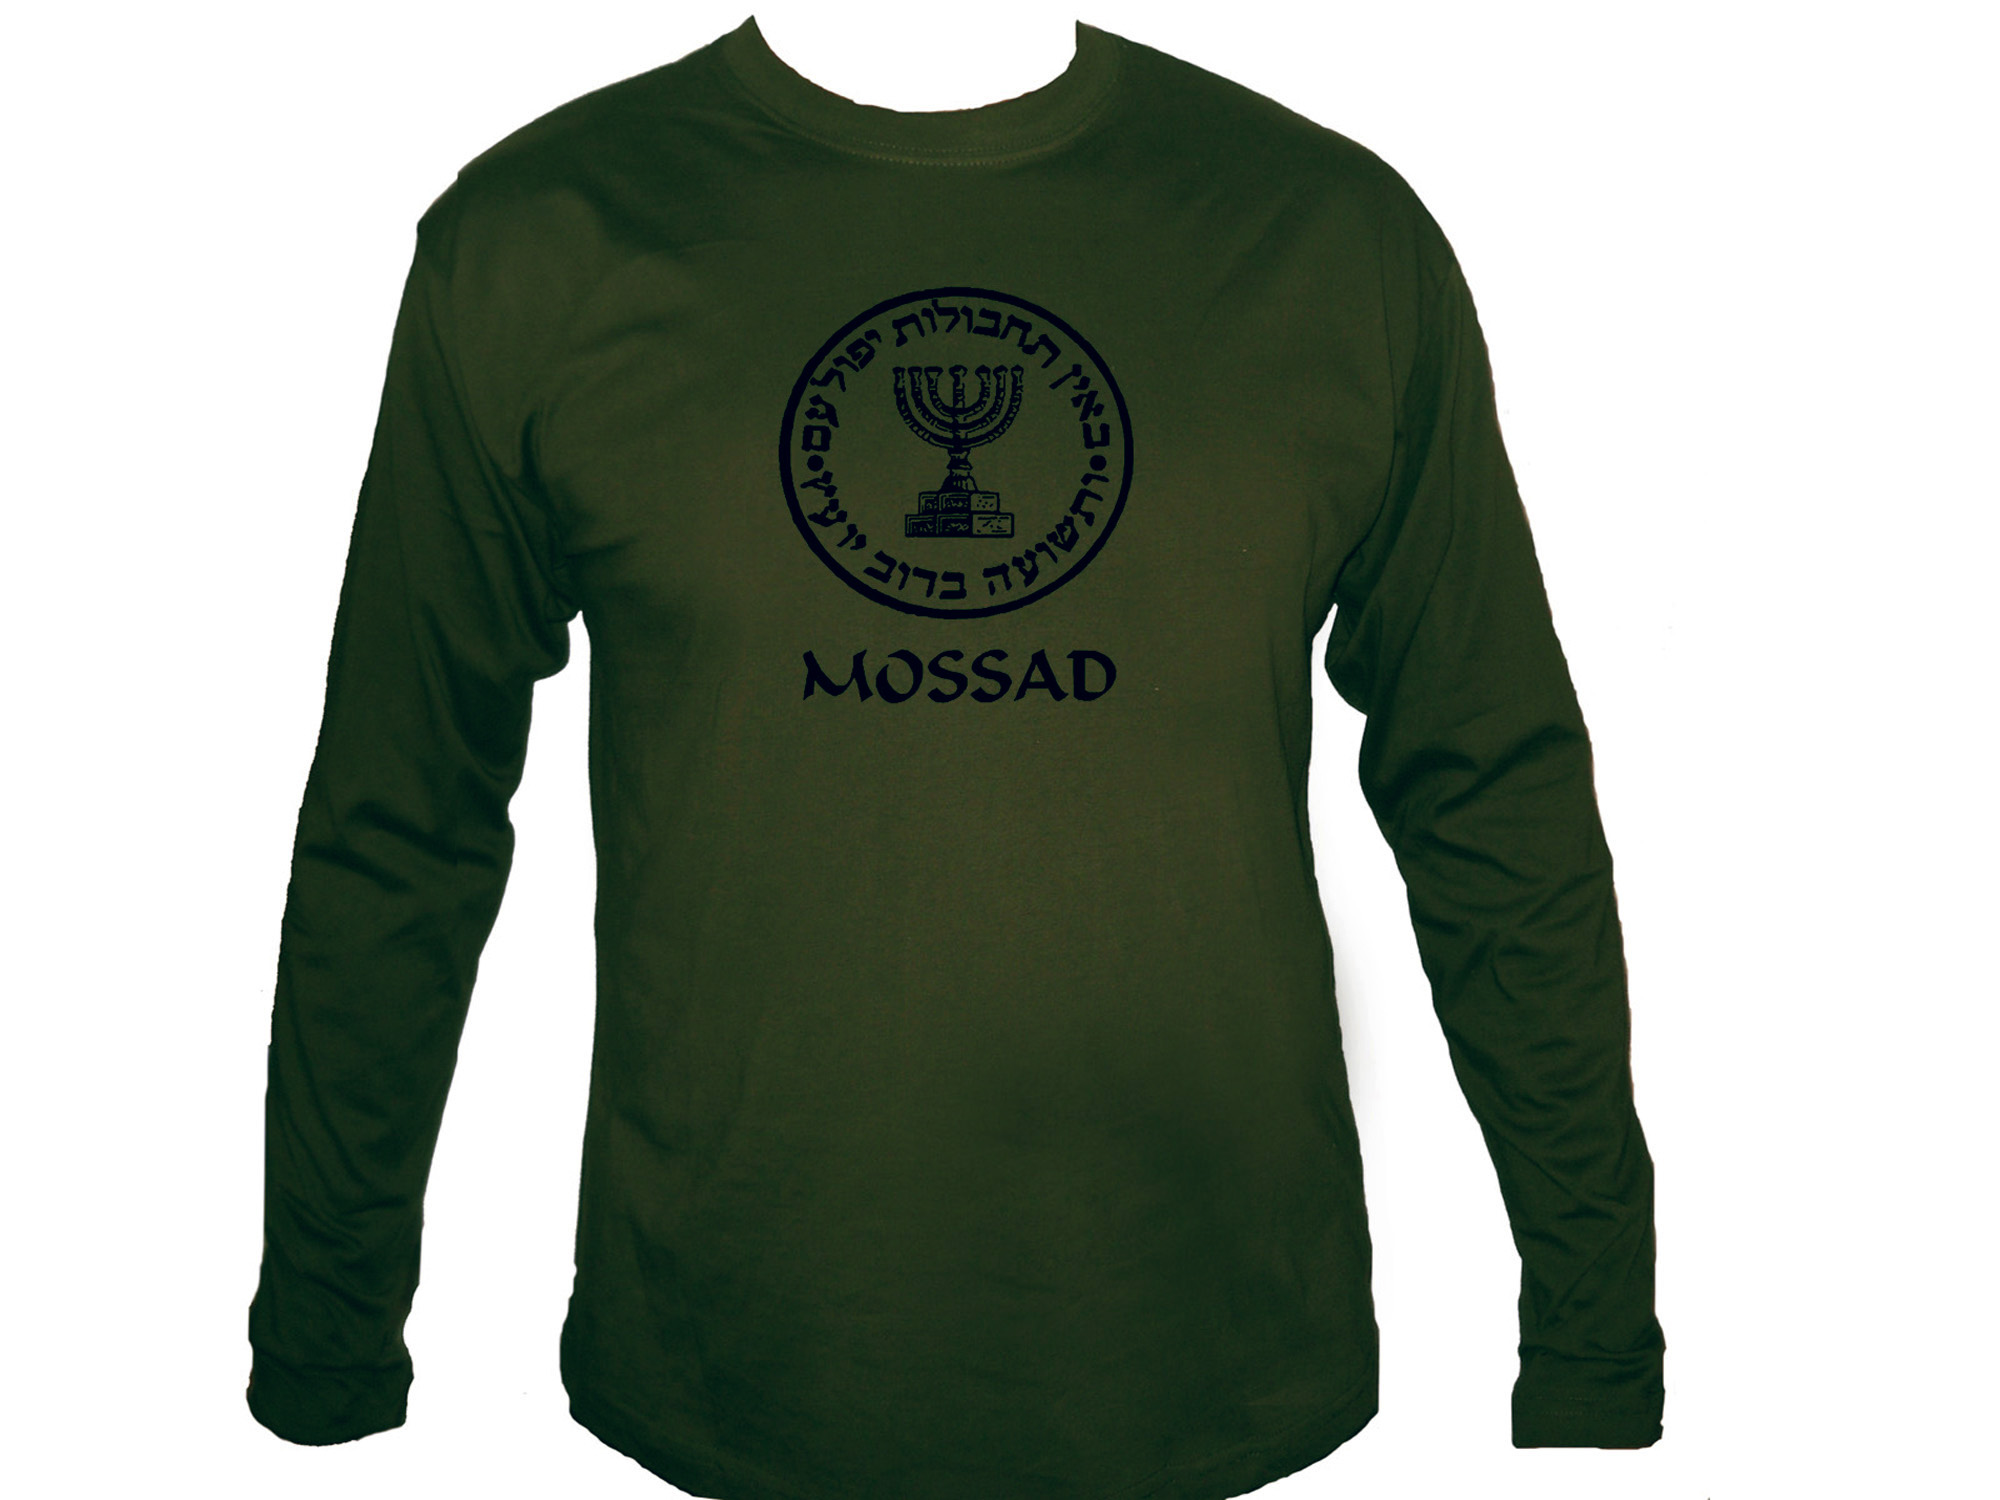 Mossad Long Sleeve Israel army green t-shirt